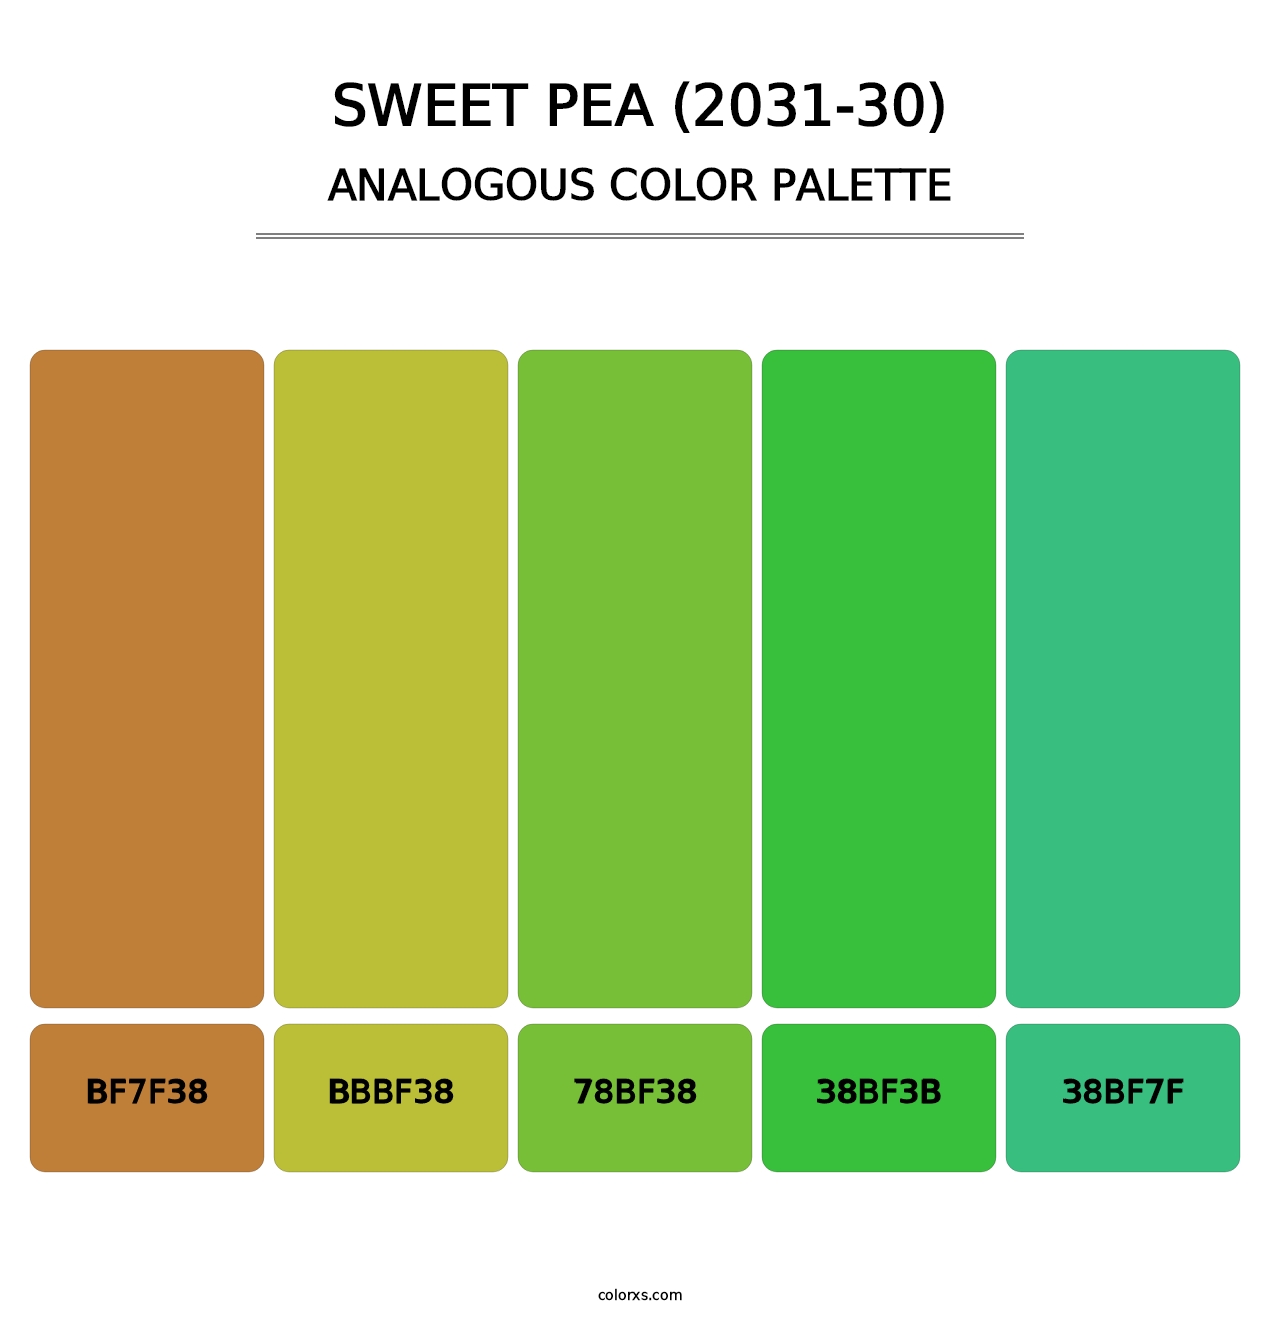 Sweet Pea (2031-30) - Analogous Color Palette